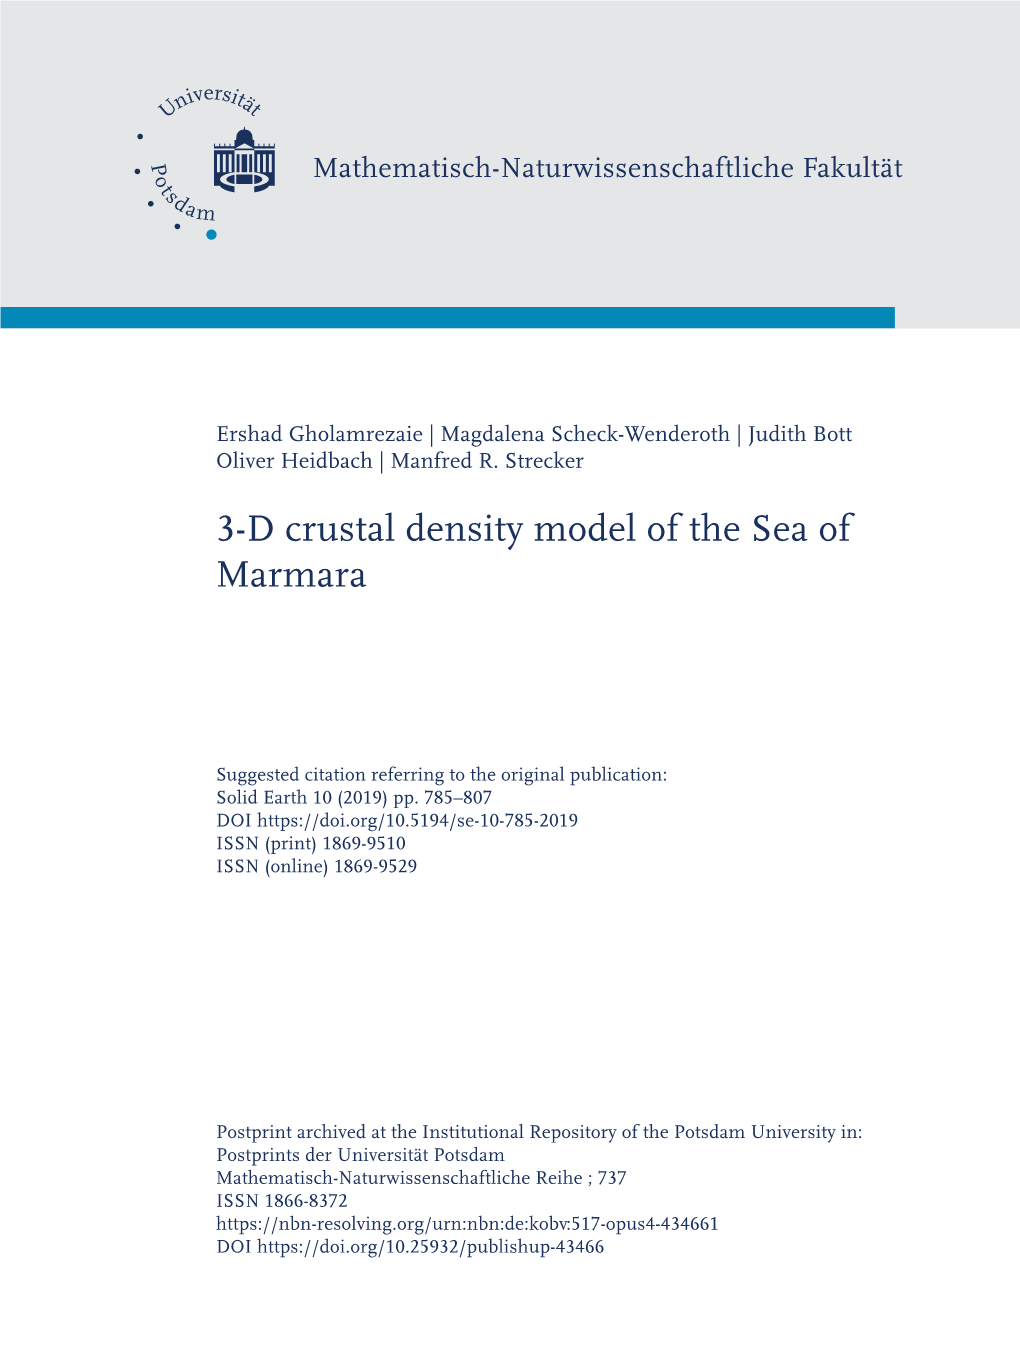 3-D Crustal Density Model of the Sea of Marmara